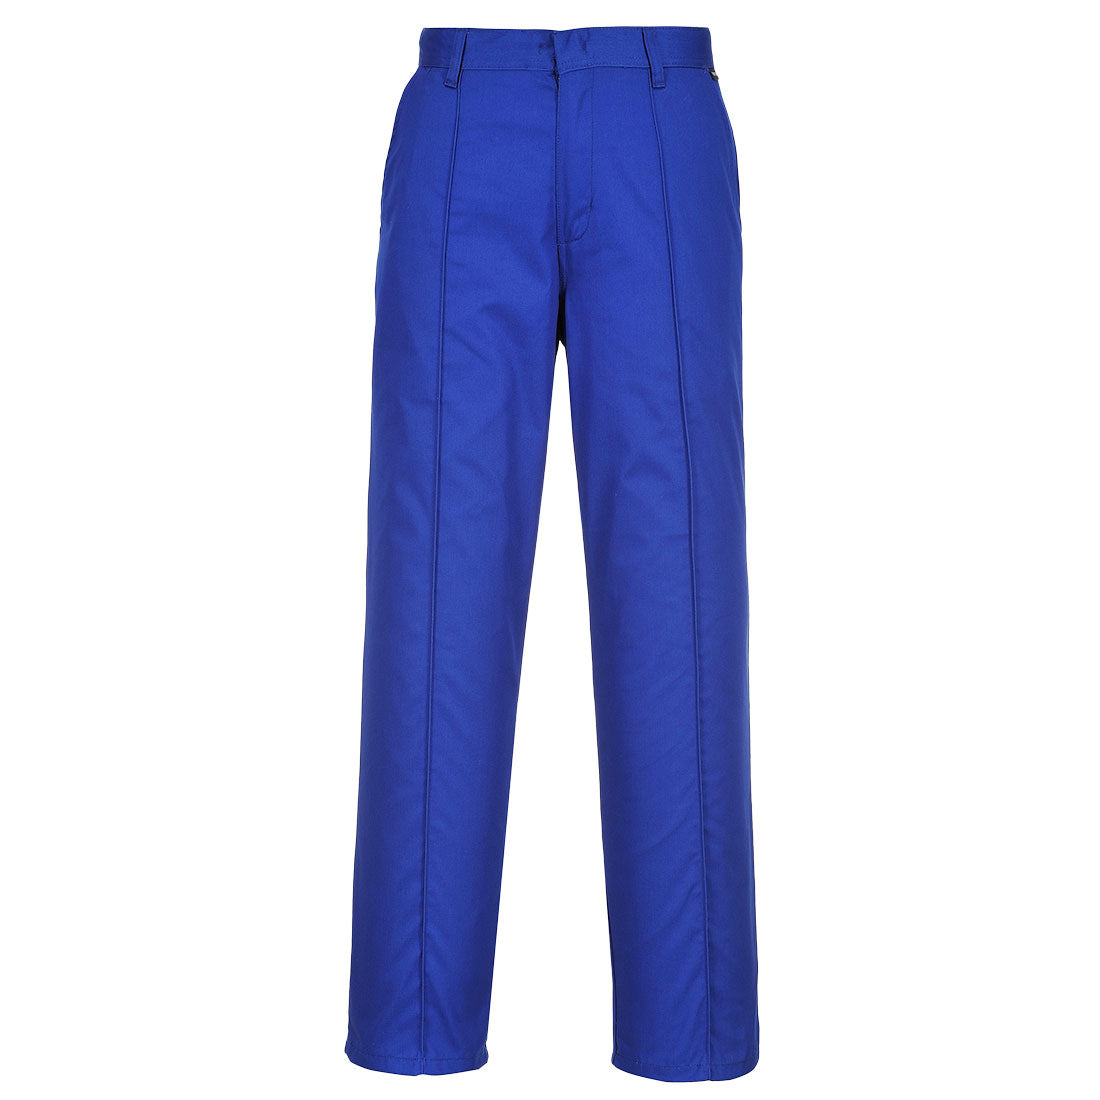 Portwest 2885 - Royal Blue Preston Mens Work Trousers with Side Pockets sz 28" Regular